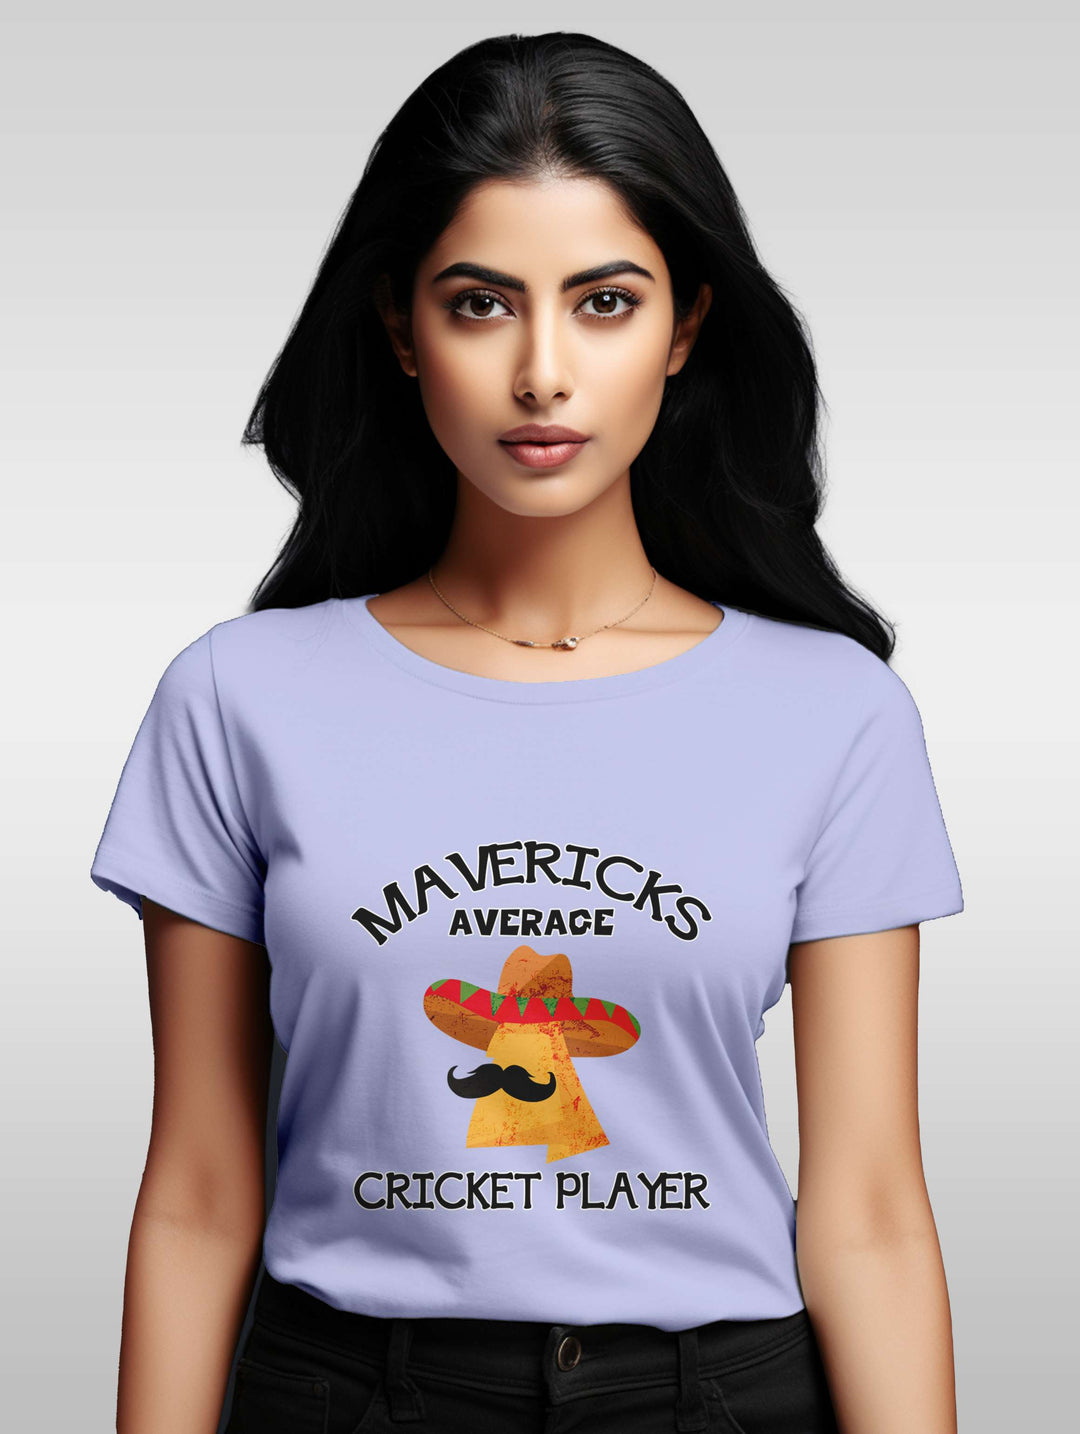 Women's Mavericks average cricket player tee